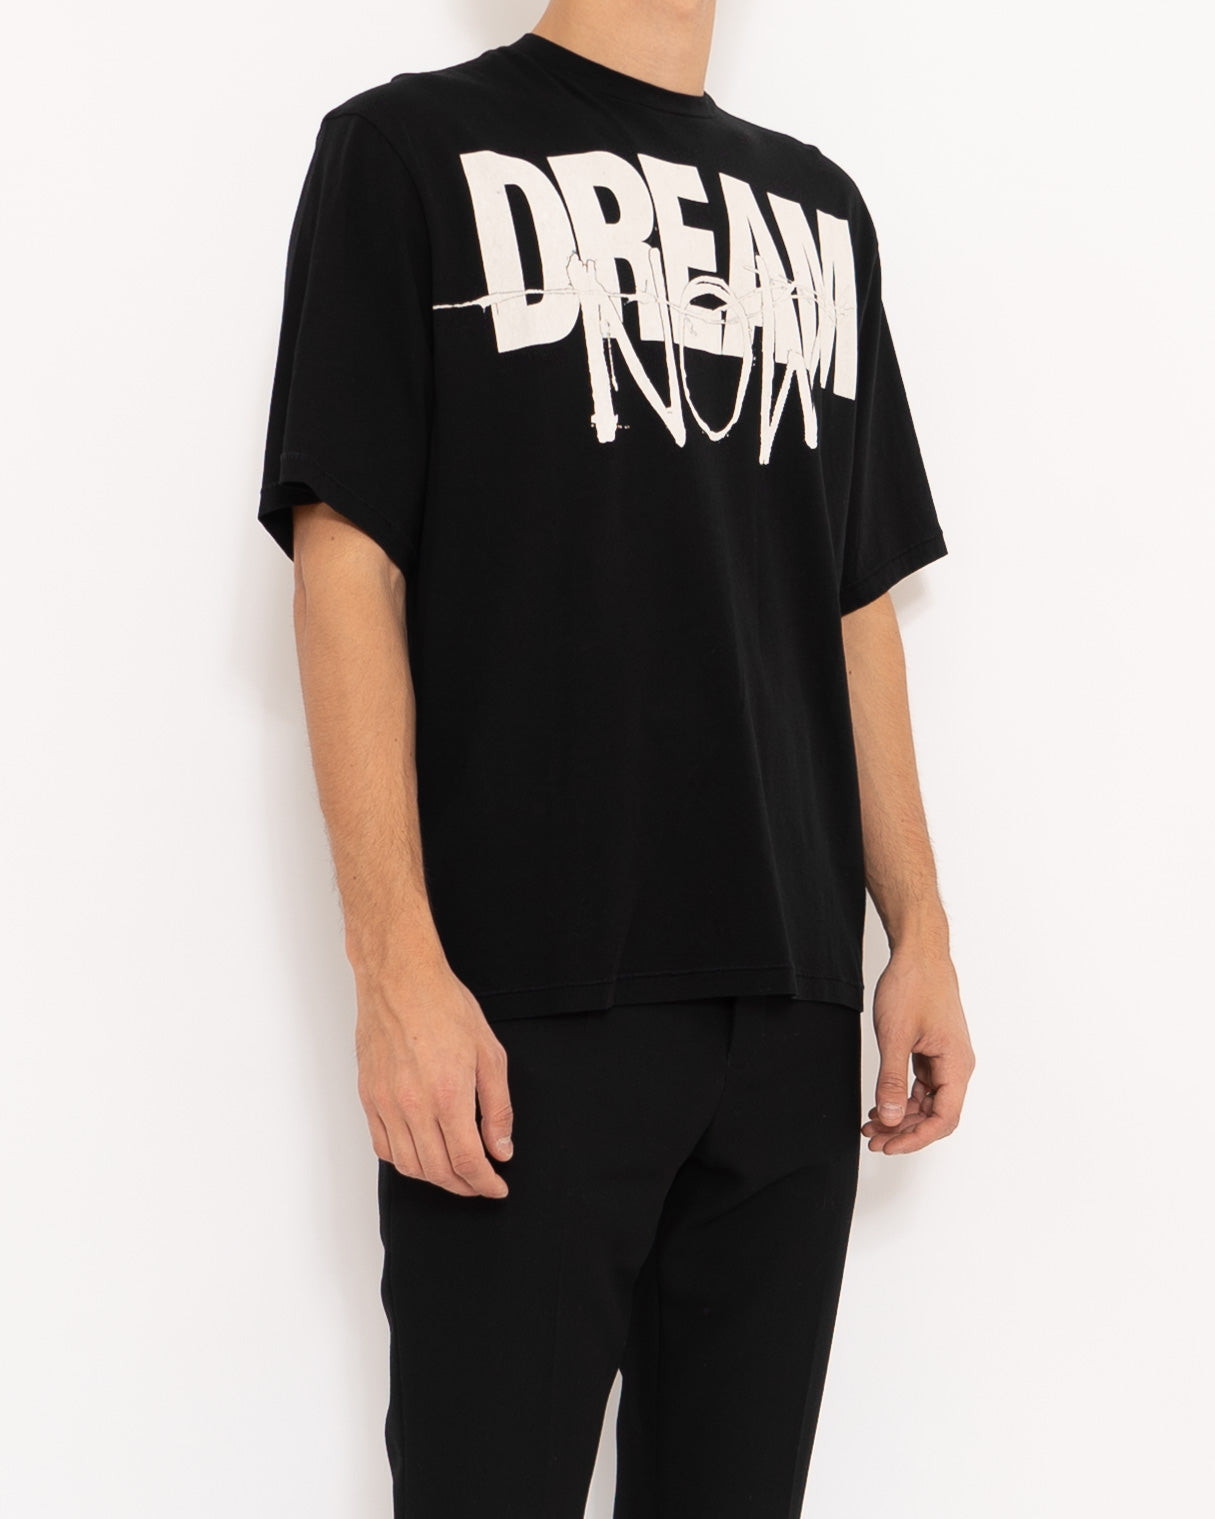 SS19 "Dream Now" T-Shirt Sample